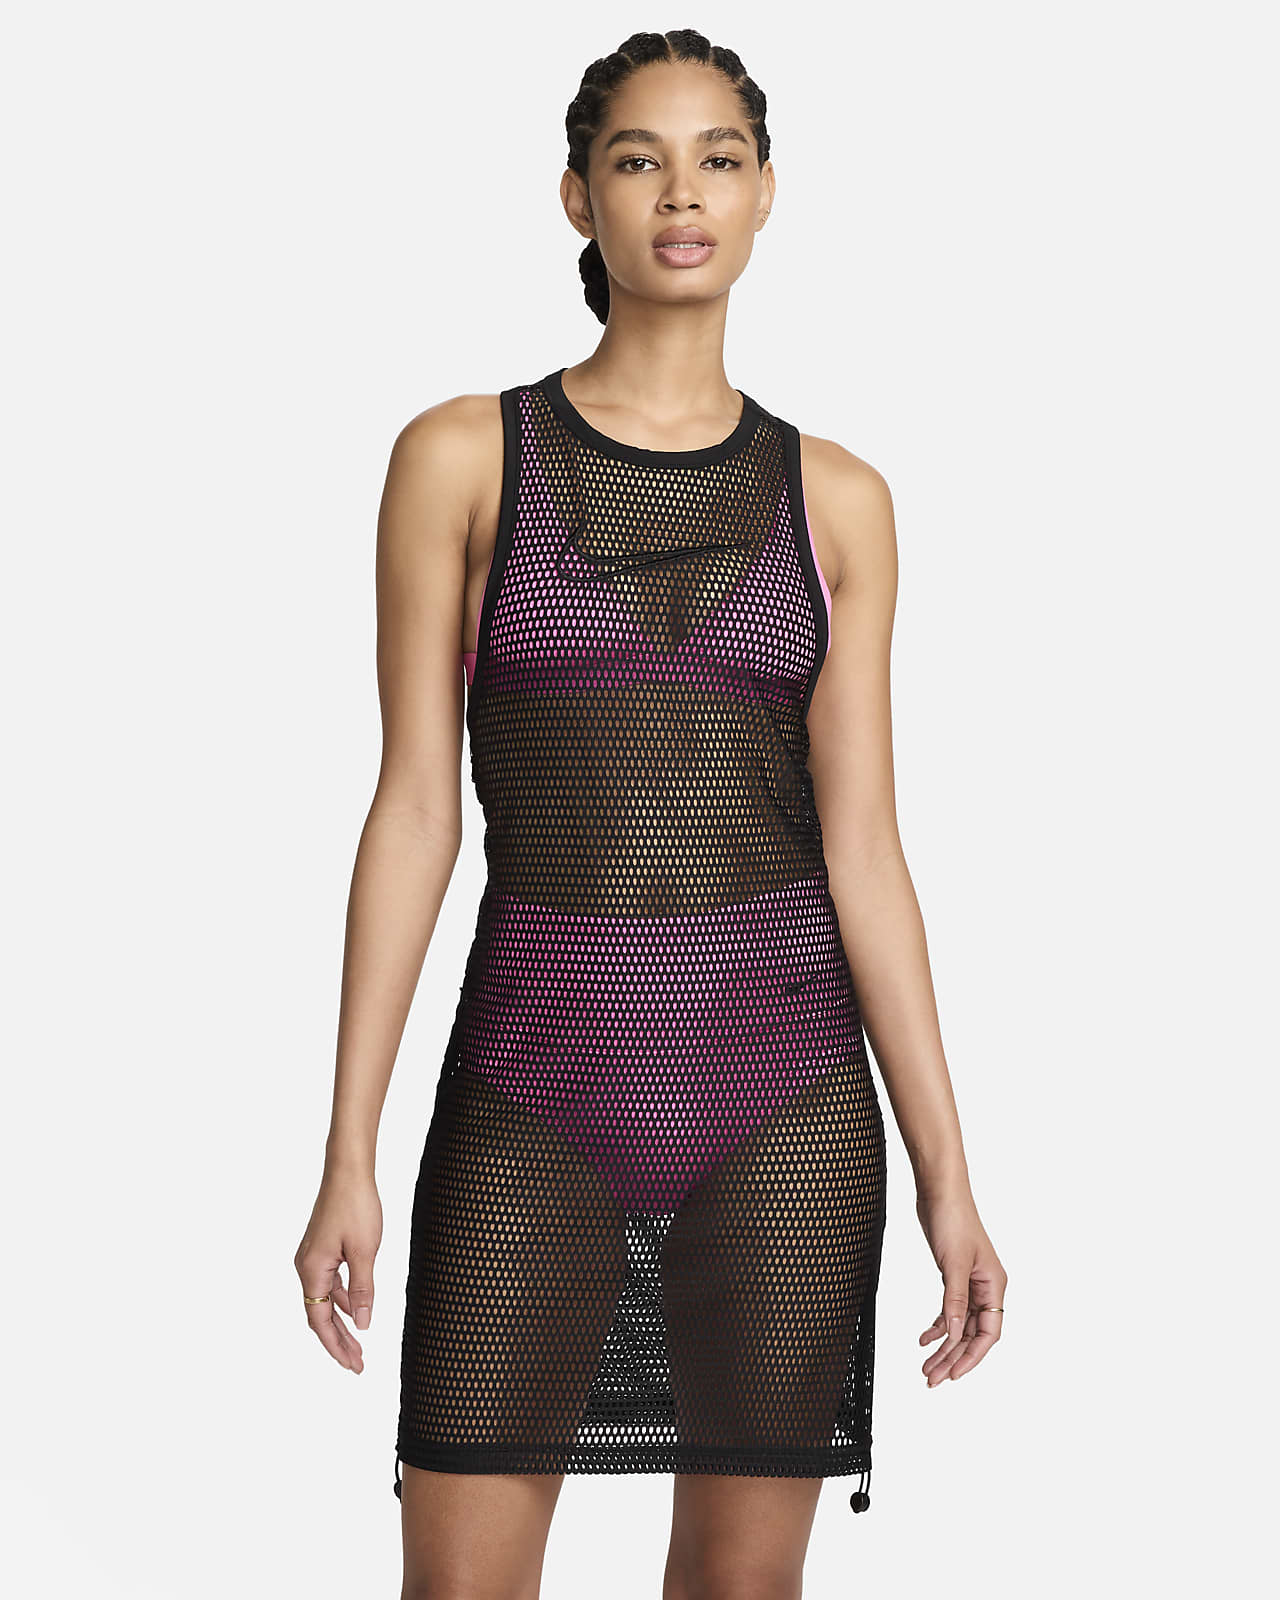 Nike Swim Women's Mesh Cover-Up Dress